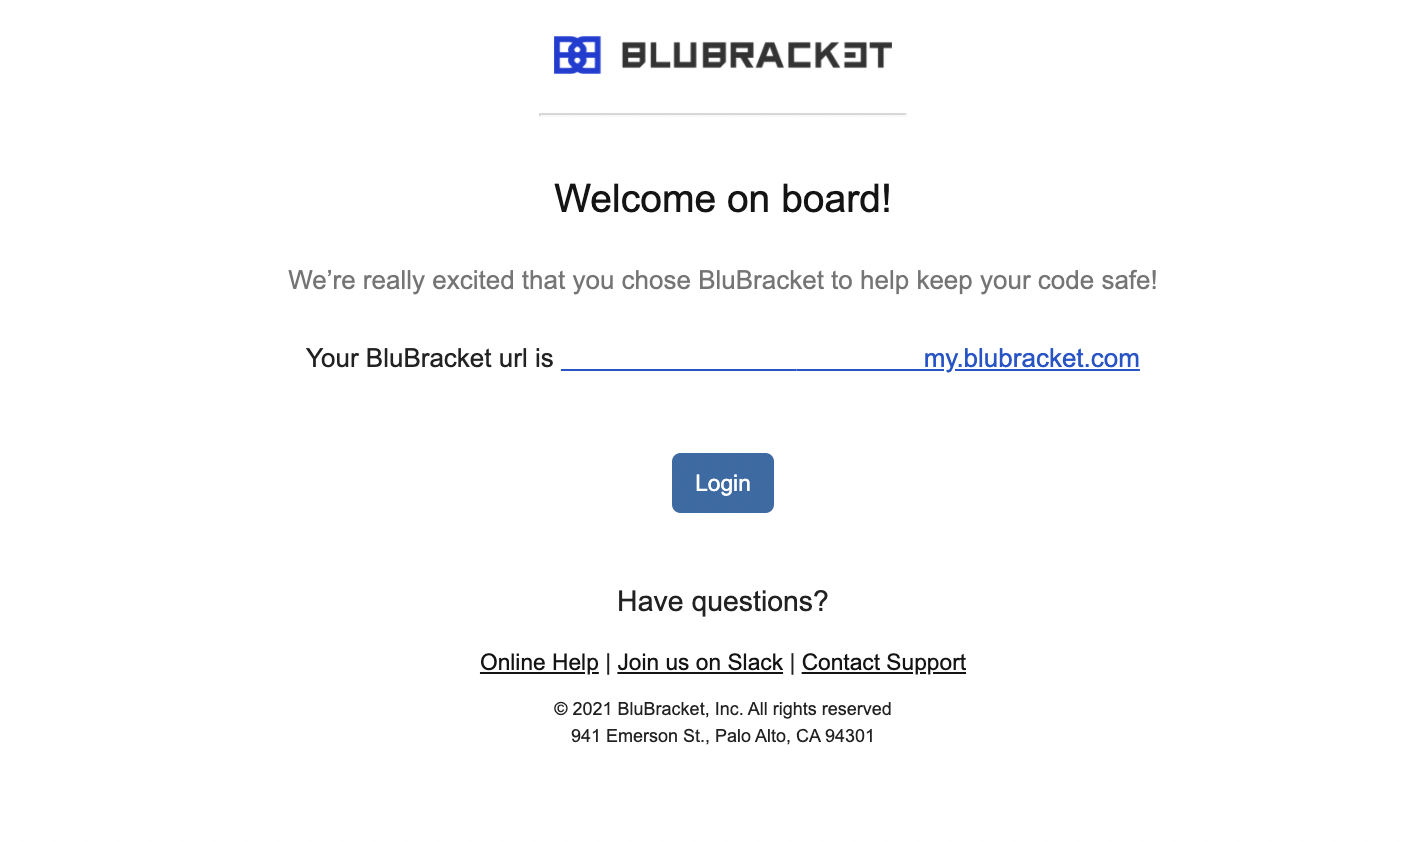 BluBracket provides your login link through email.